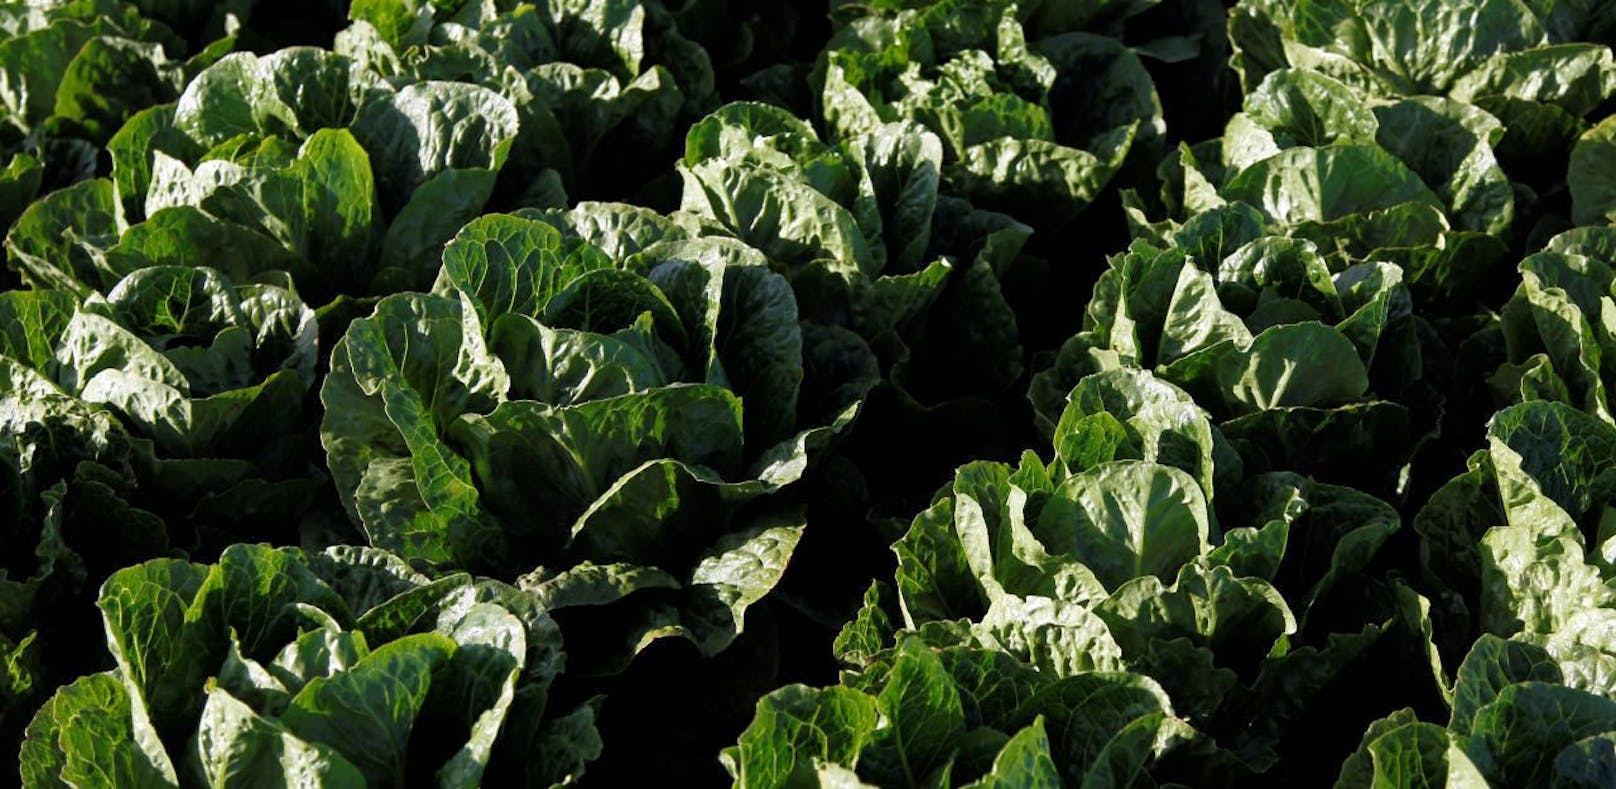 Grün, saftig, tödlich: Verseuchter Salat in den USA.